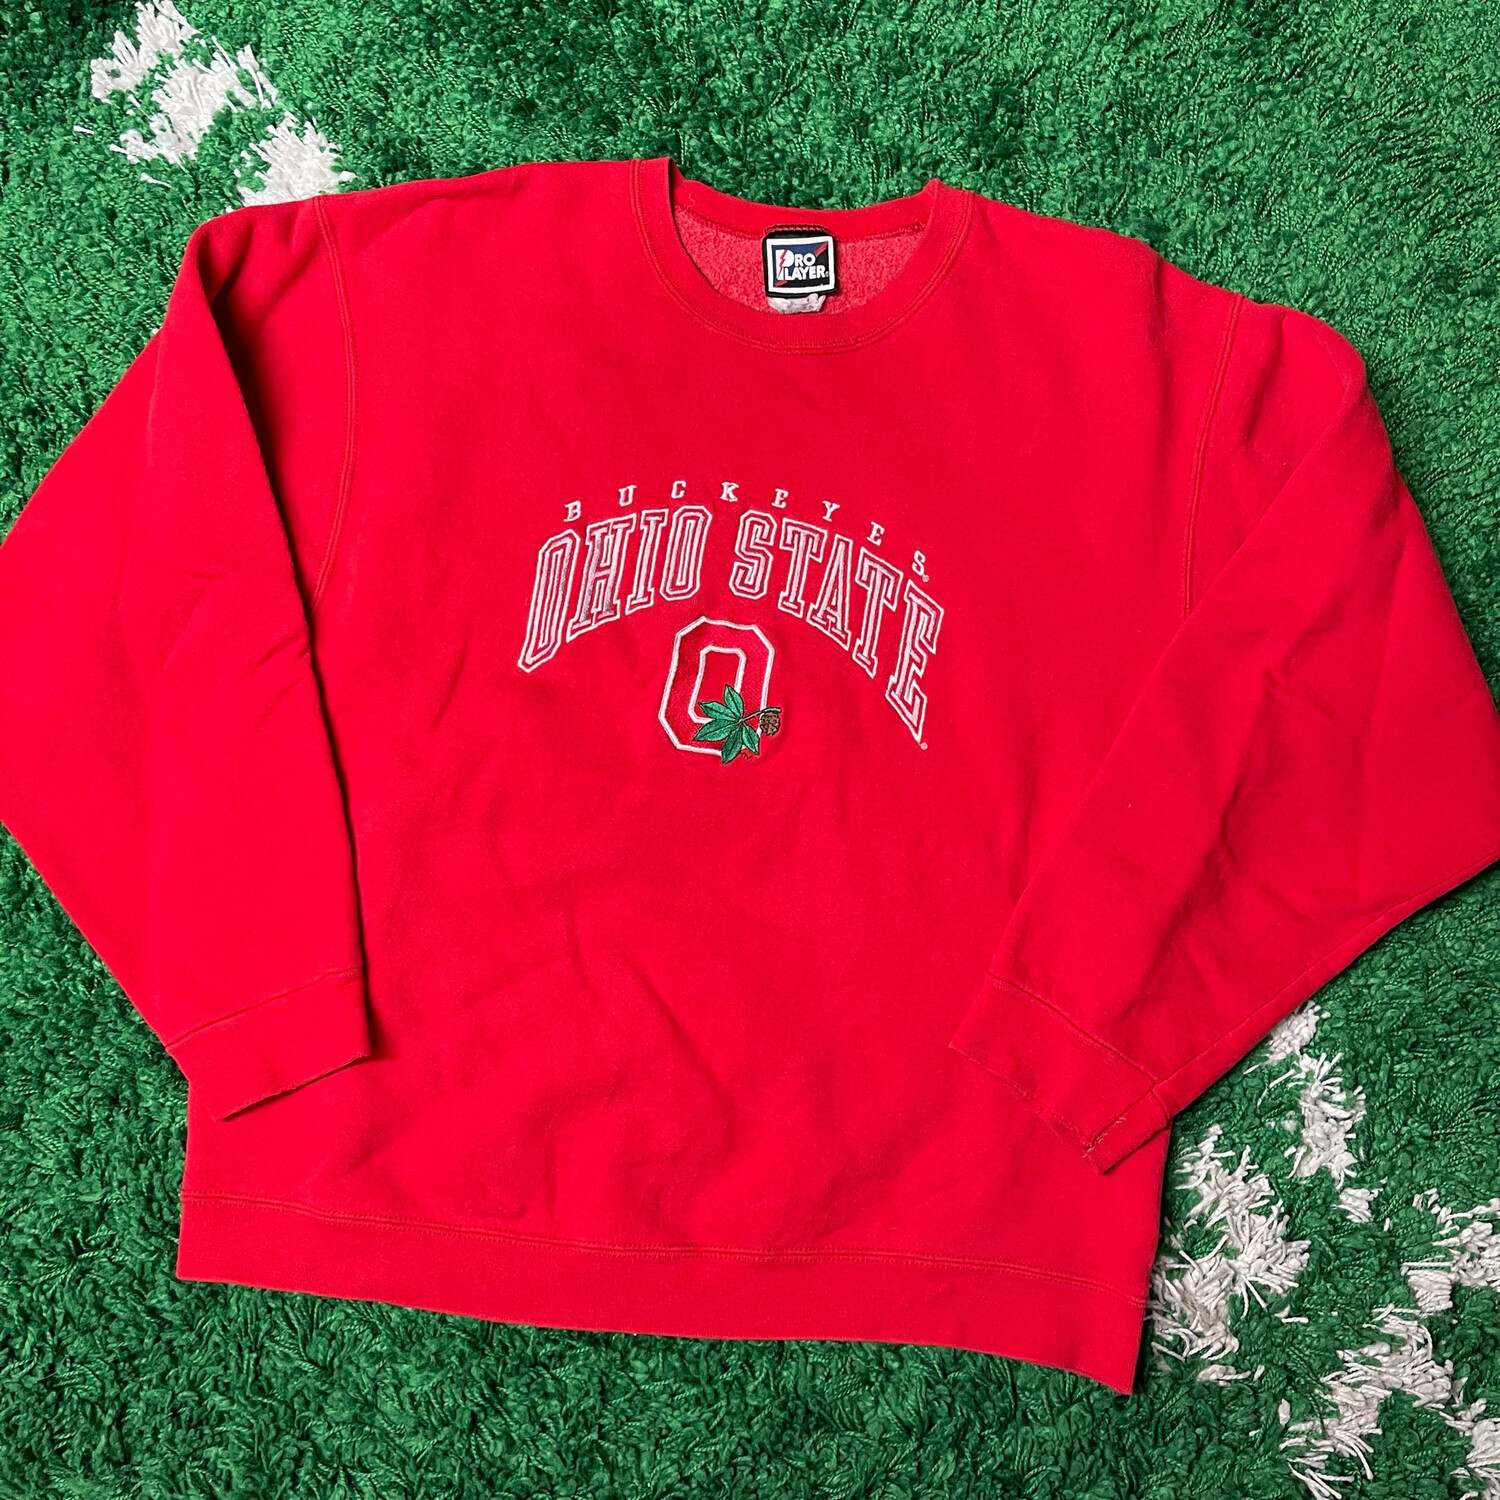 Ohio State Buckeyes Red Crewneck Sweatshirt Size Medium